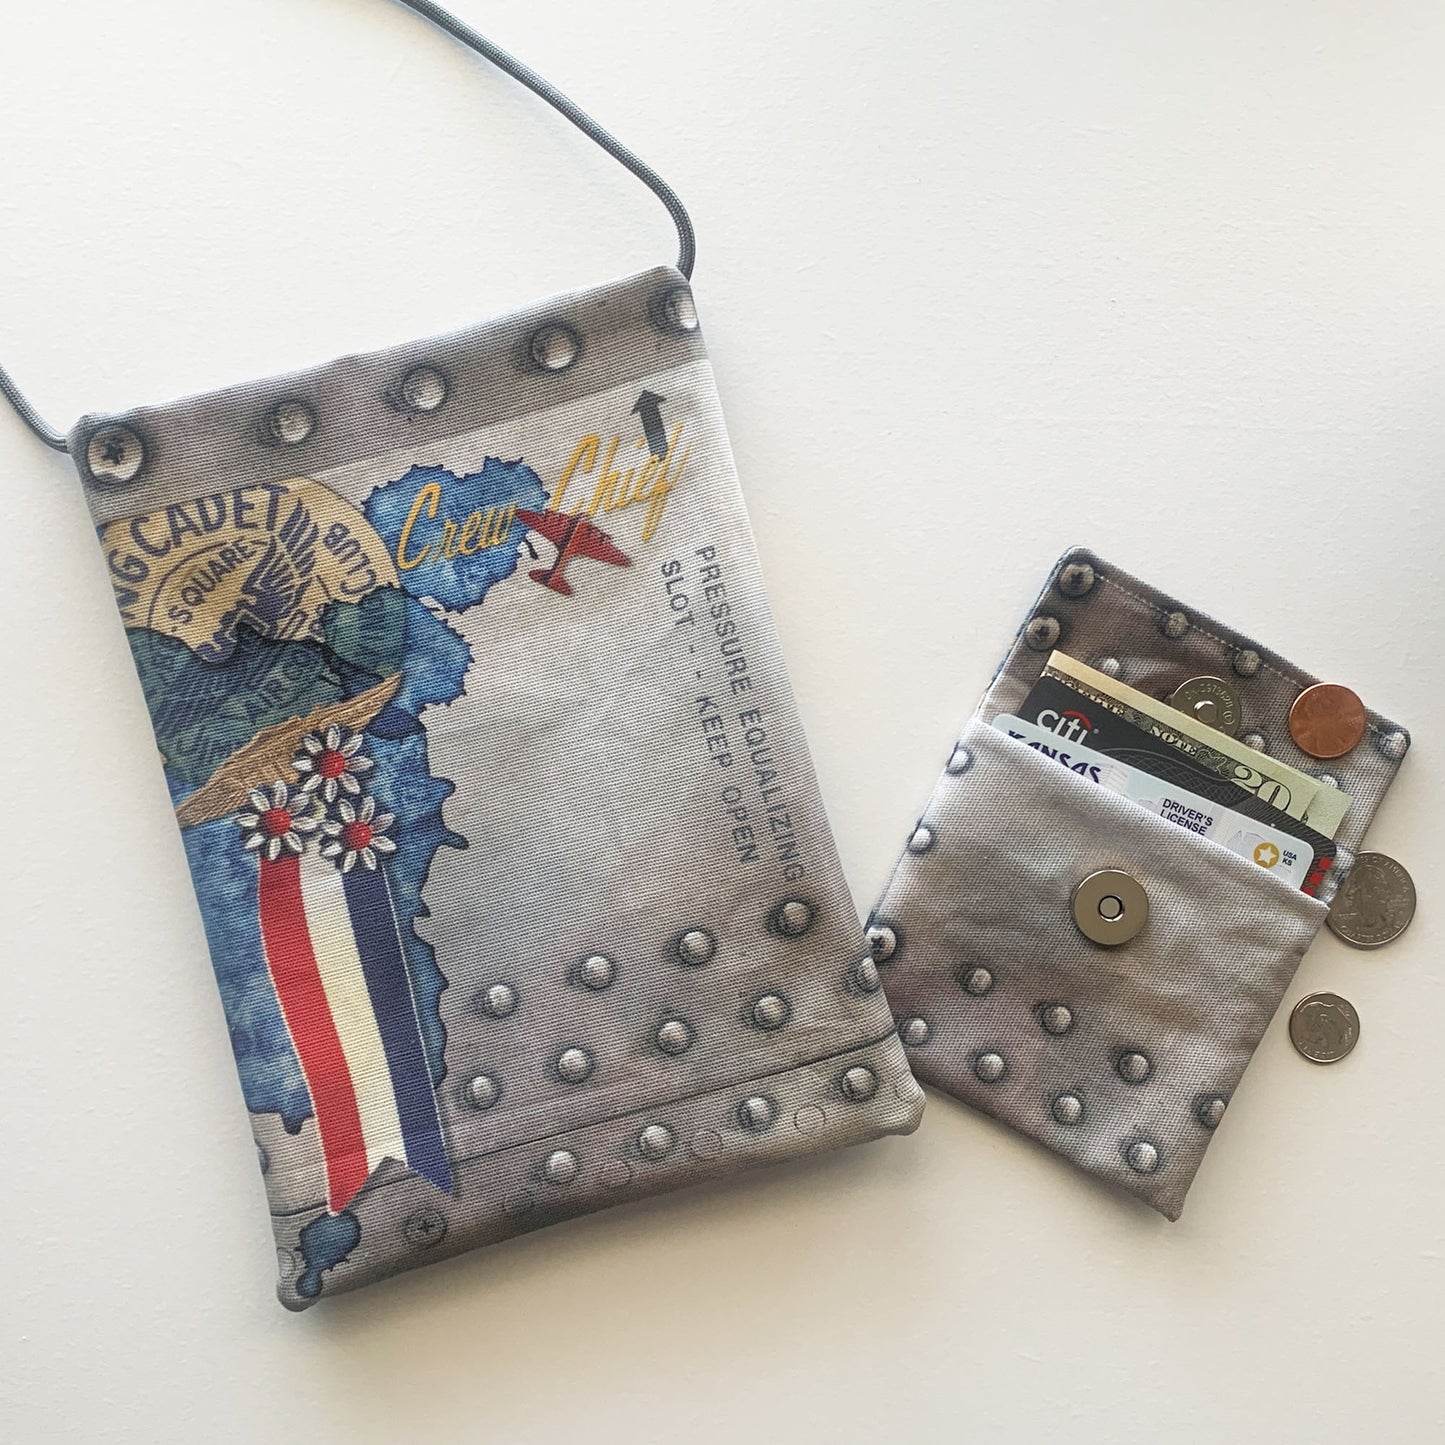 RUBY - Handmade purse with airplane / Rosie riveter theme